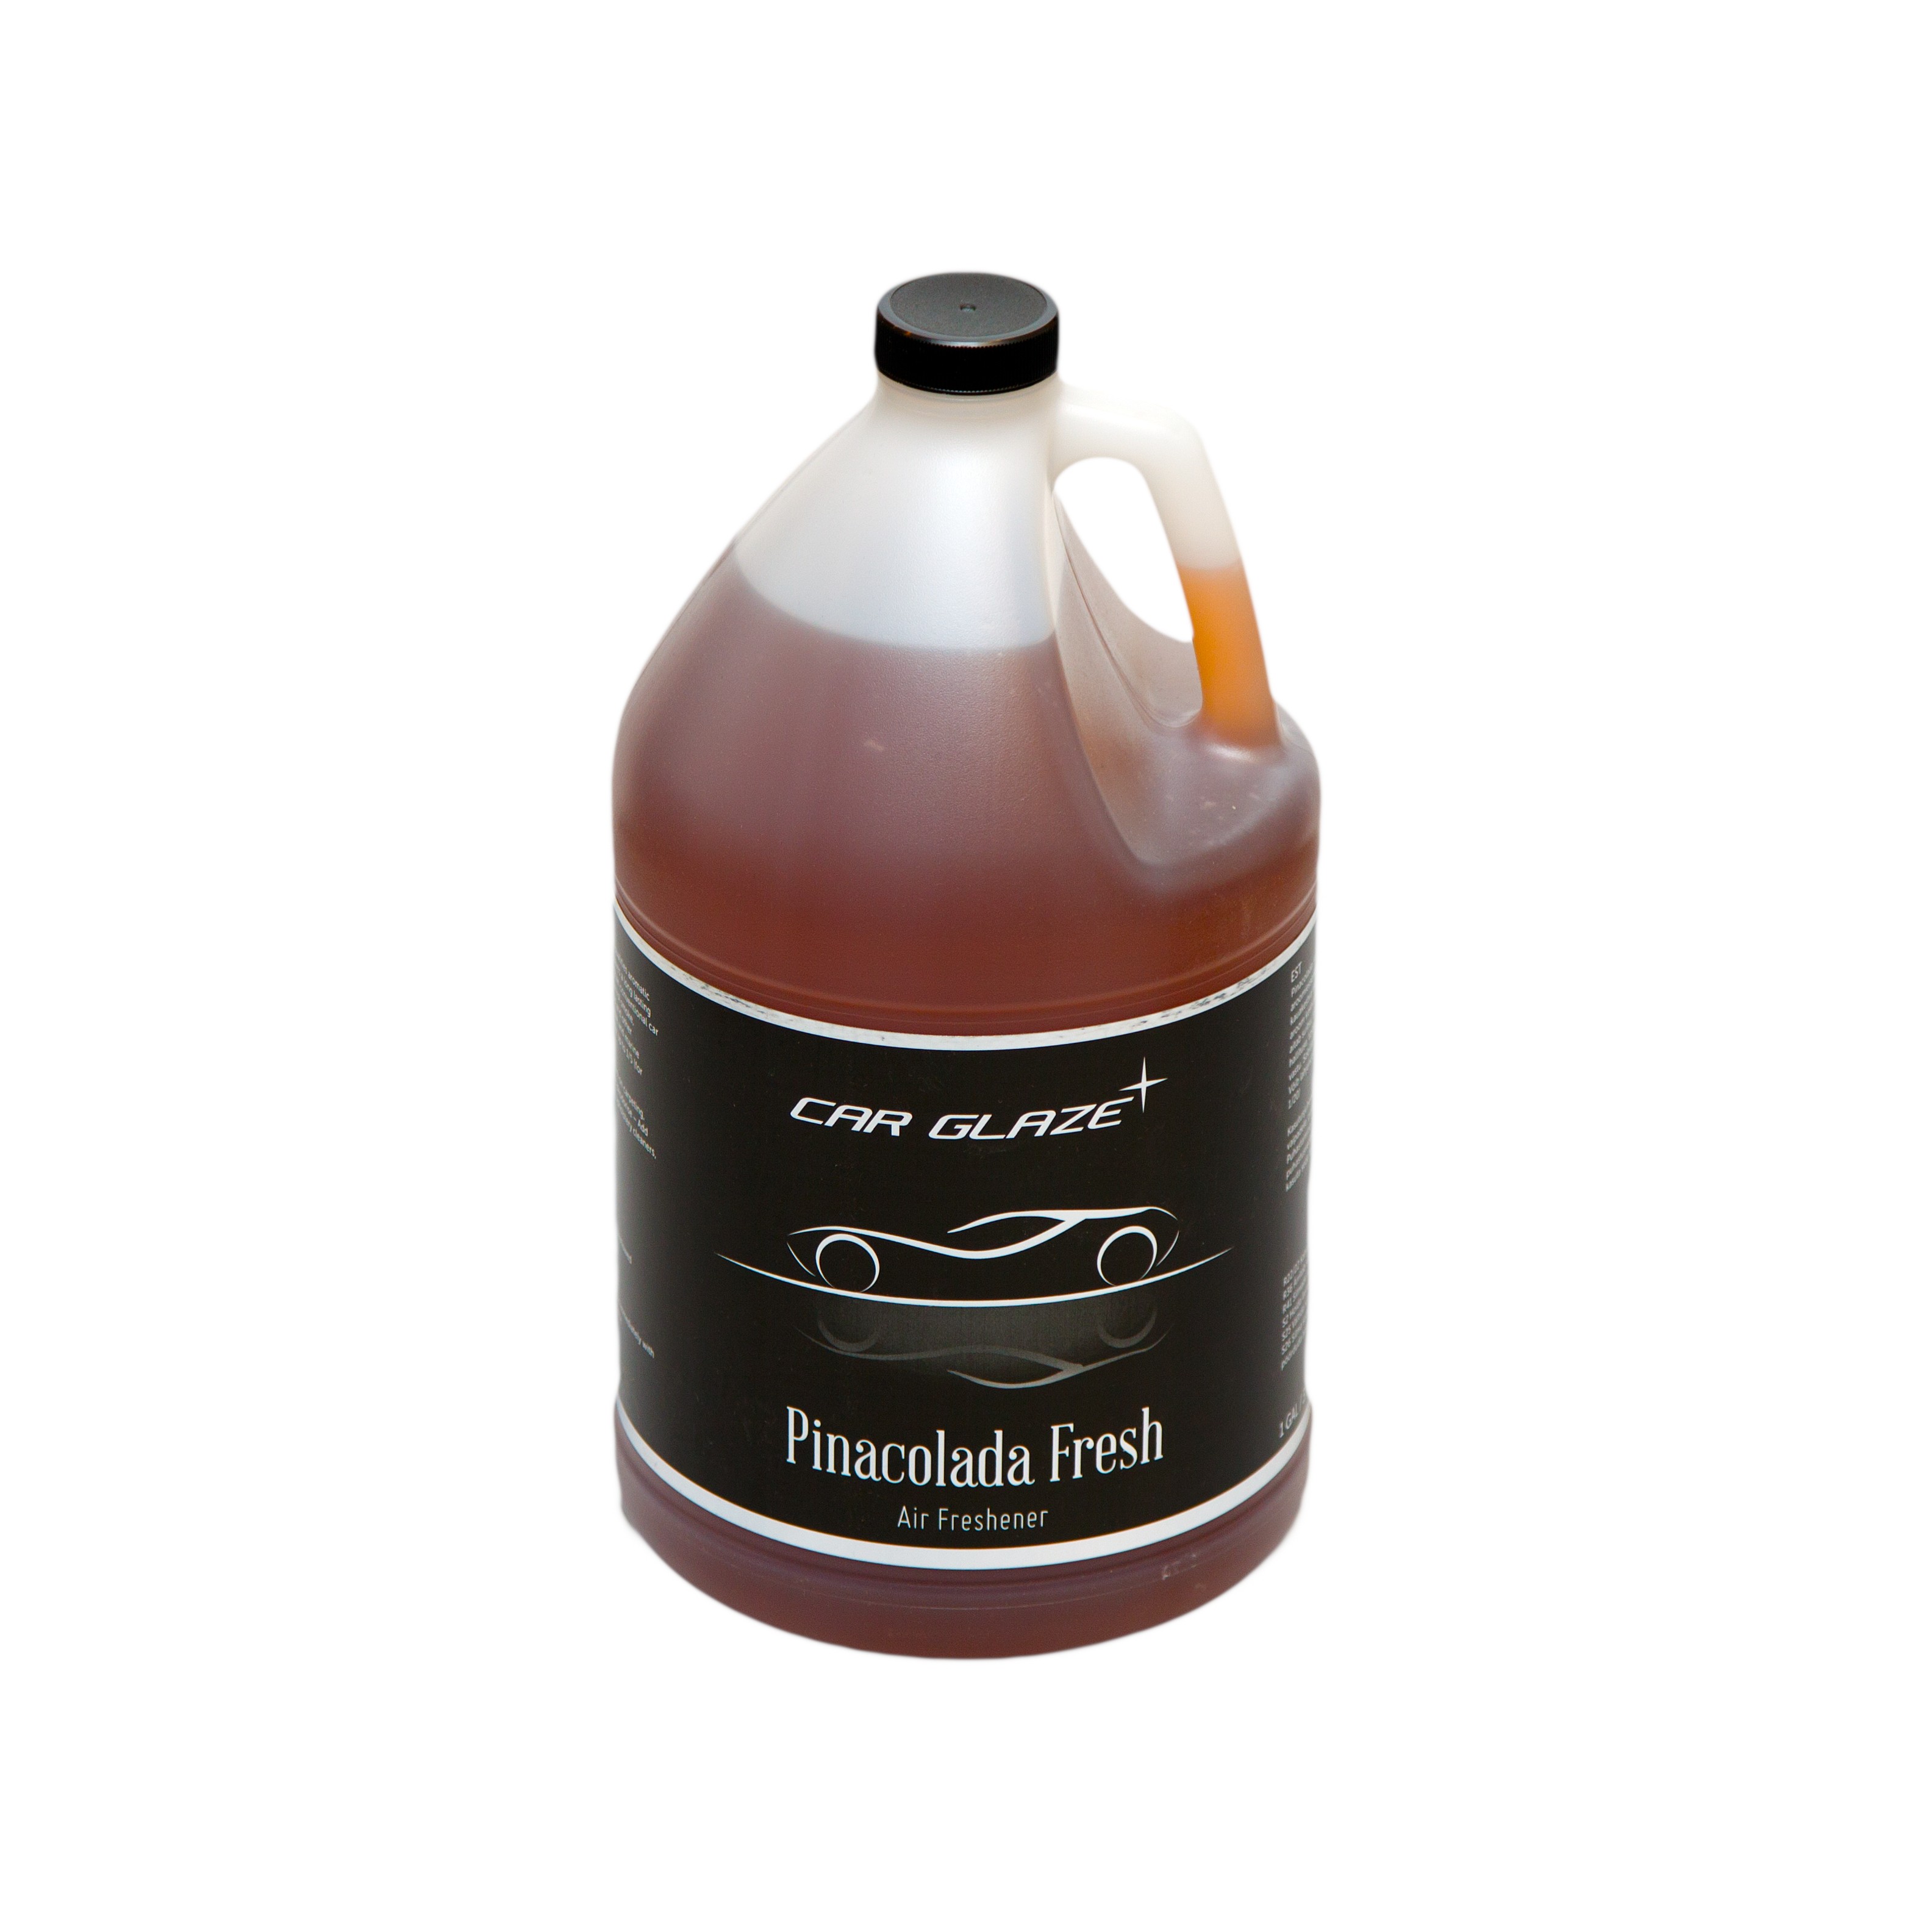 PINACOLADA FRESH -  Car Glaze - ароматизатор